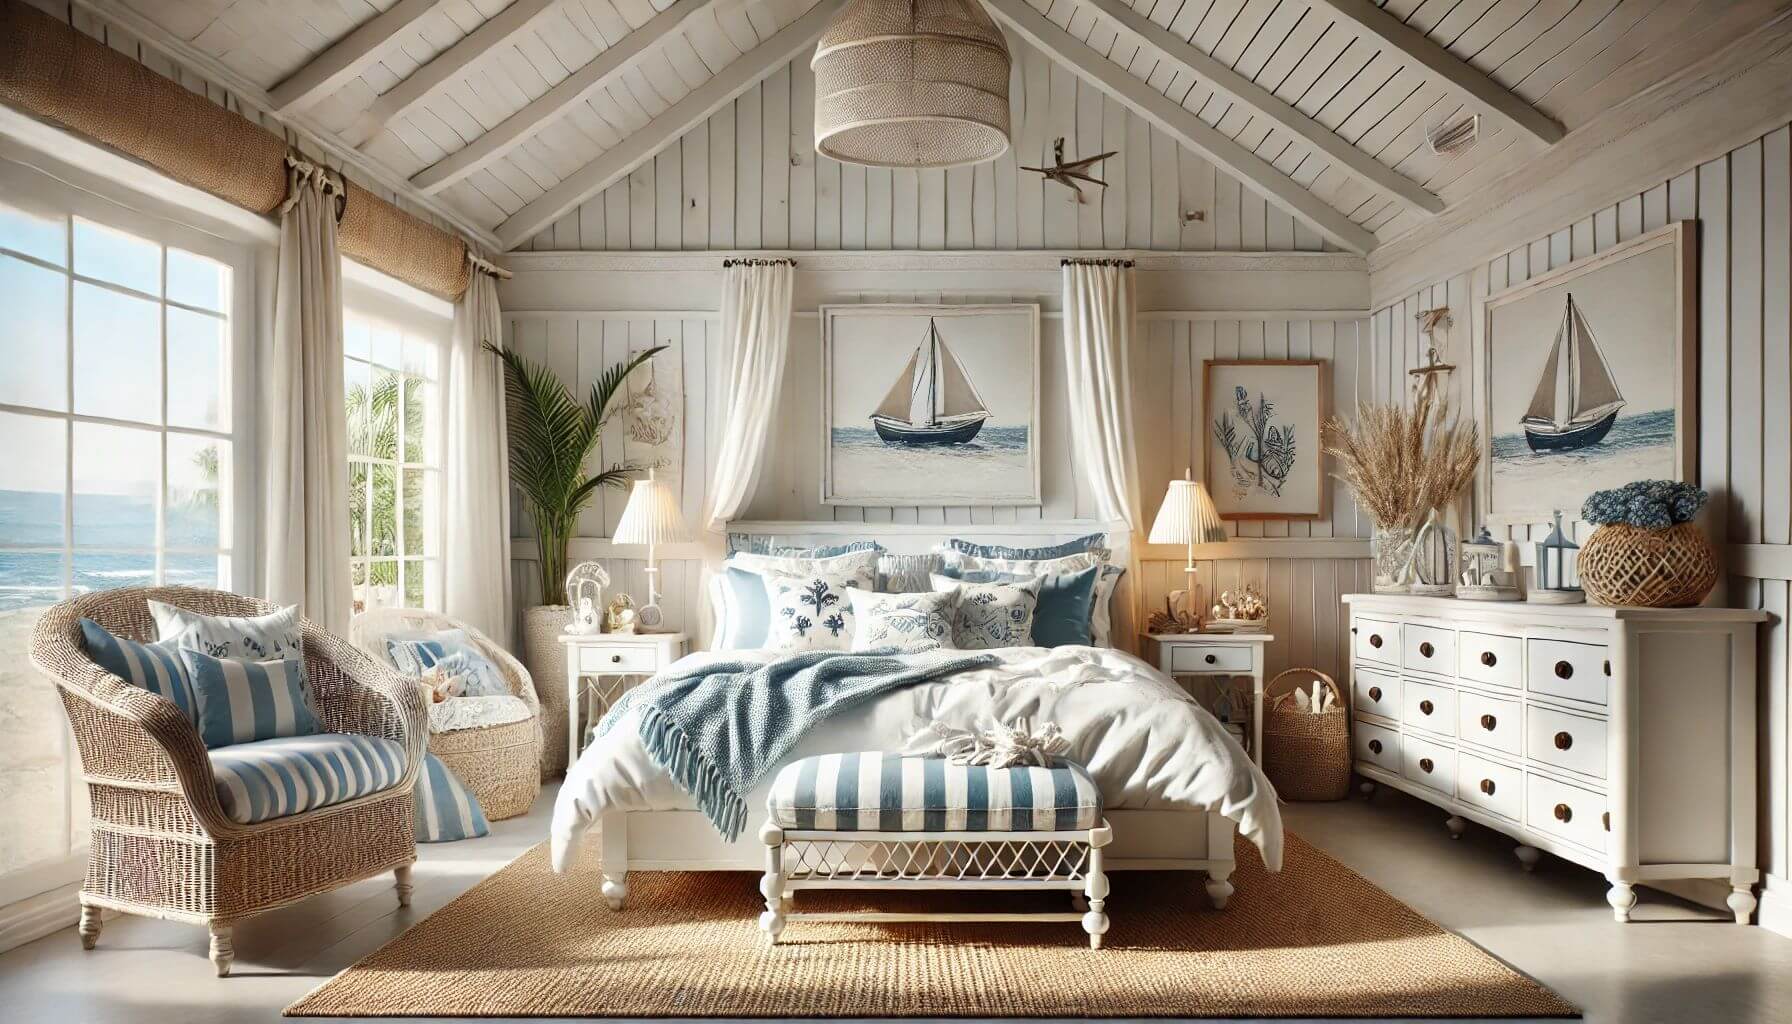 25 Best Beach House Bedroom Design Ideas for Relaxing Retreats